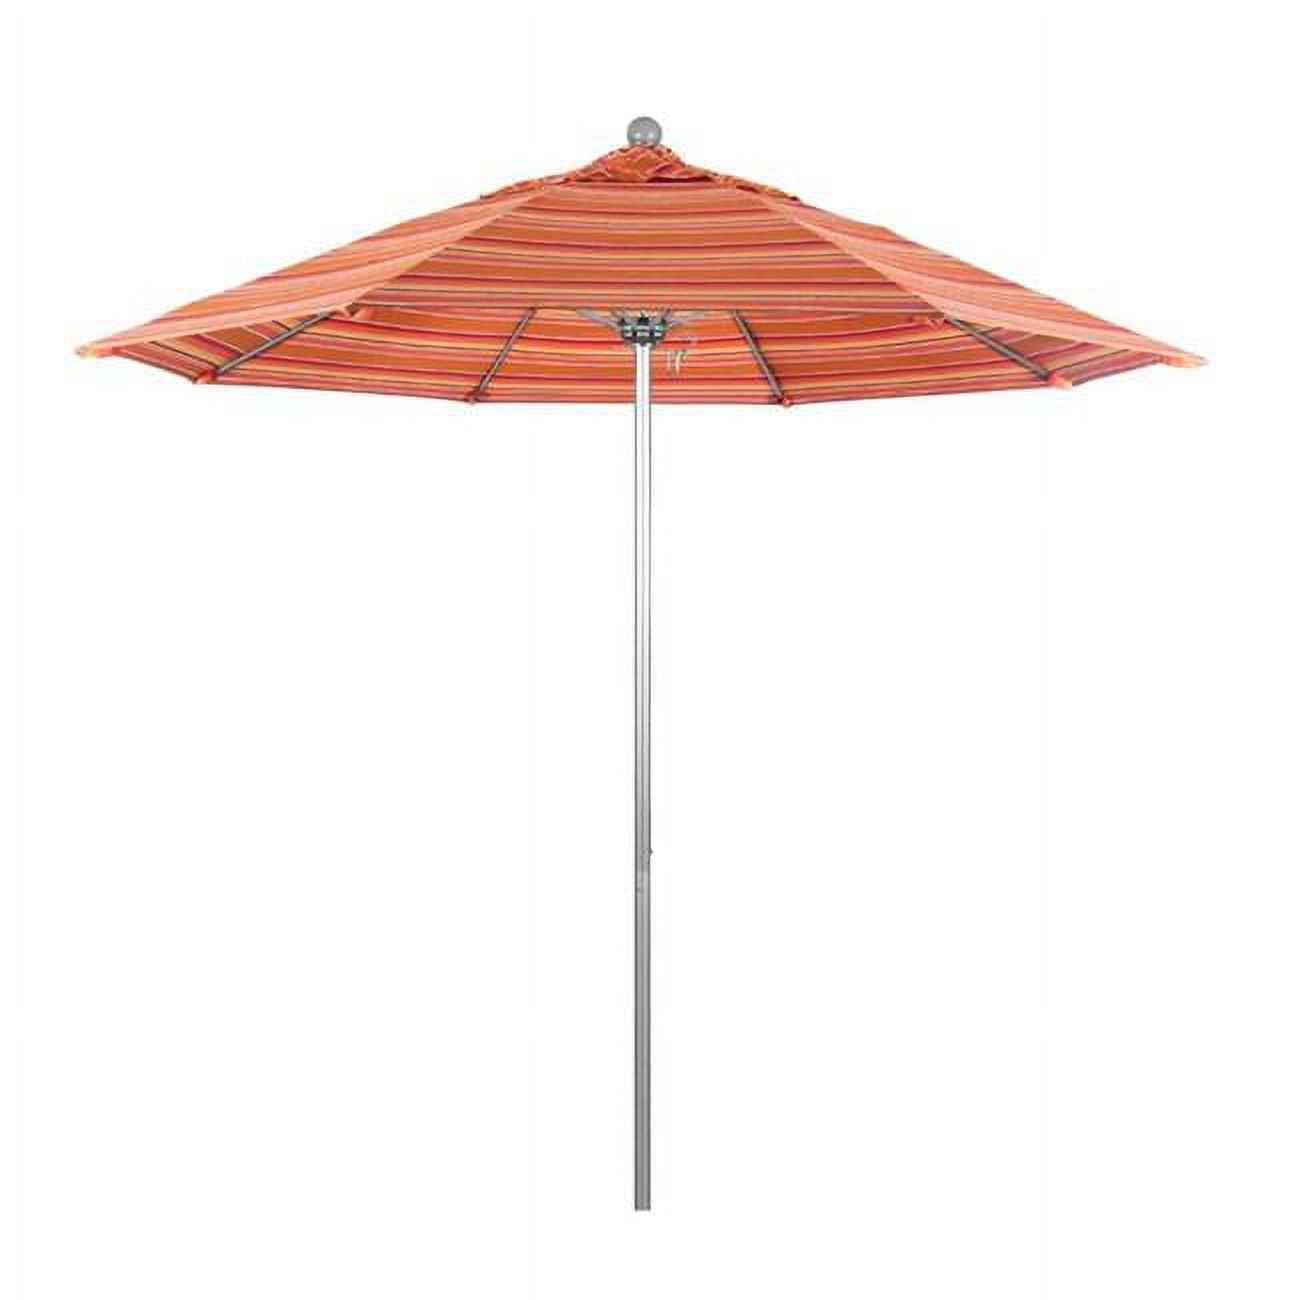 Venture Silver Market Umbrella, Dolce Mango - 9 Ft. X 8 Ribs